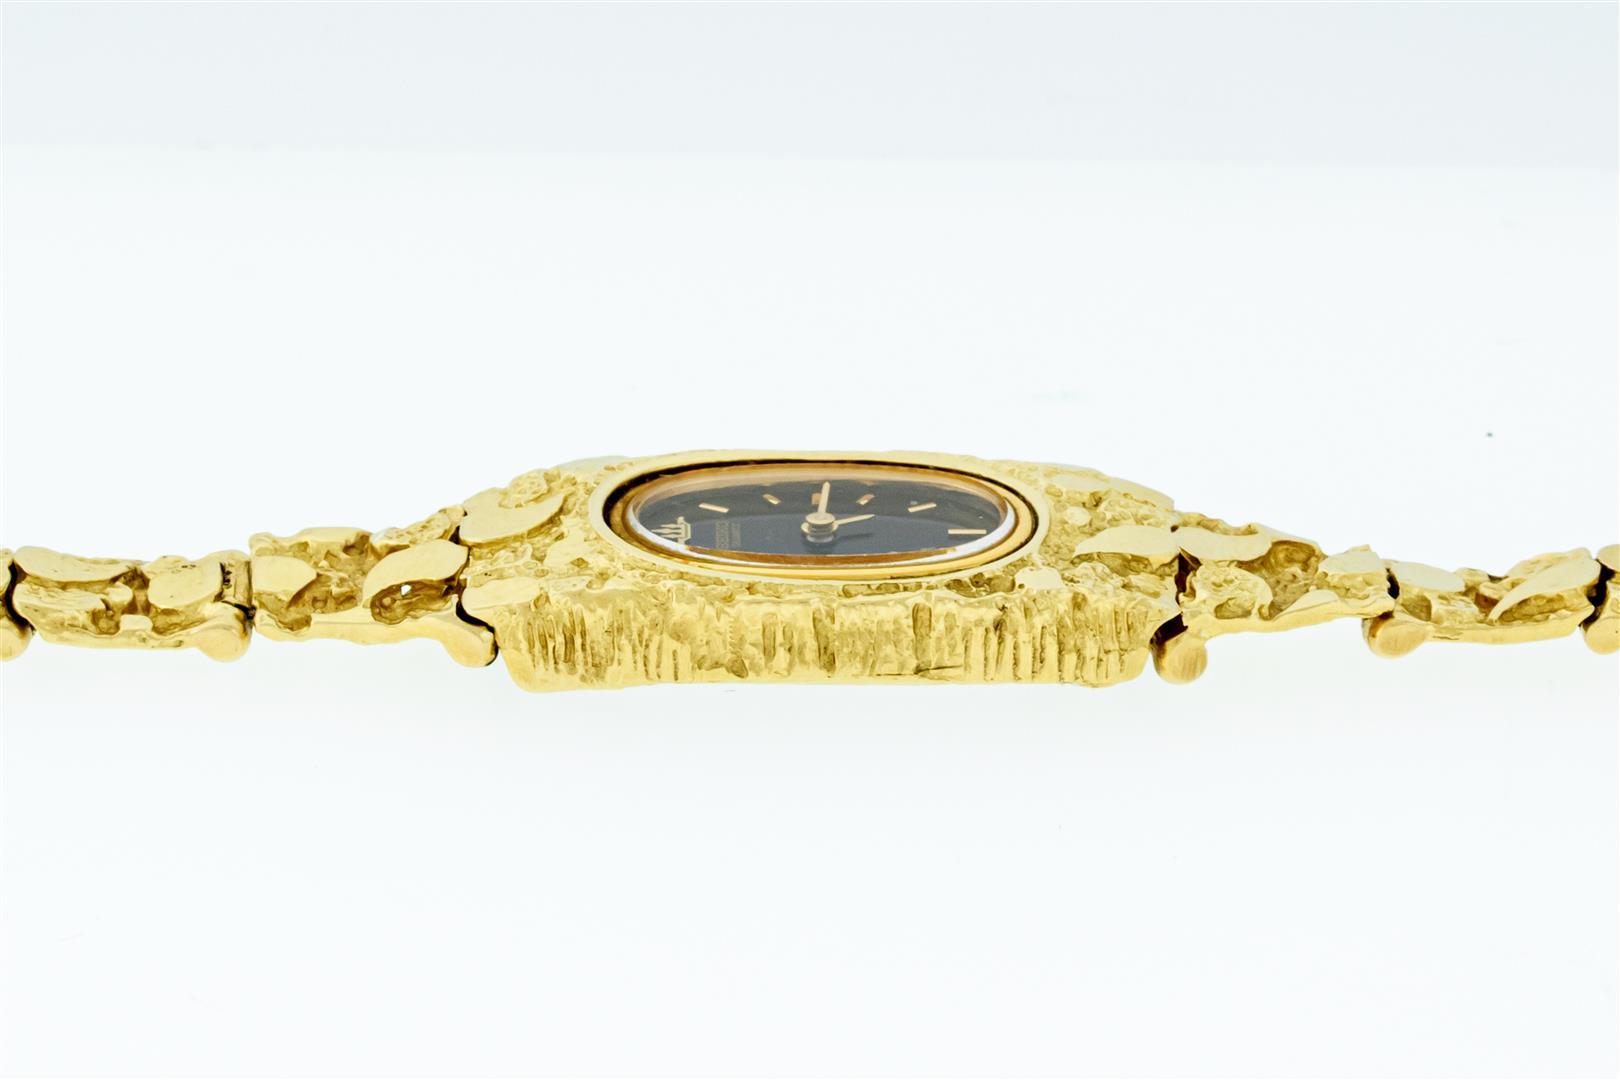 Ladies 14K Yellow Gold Seiko Nugget Wristwatch